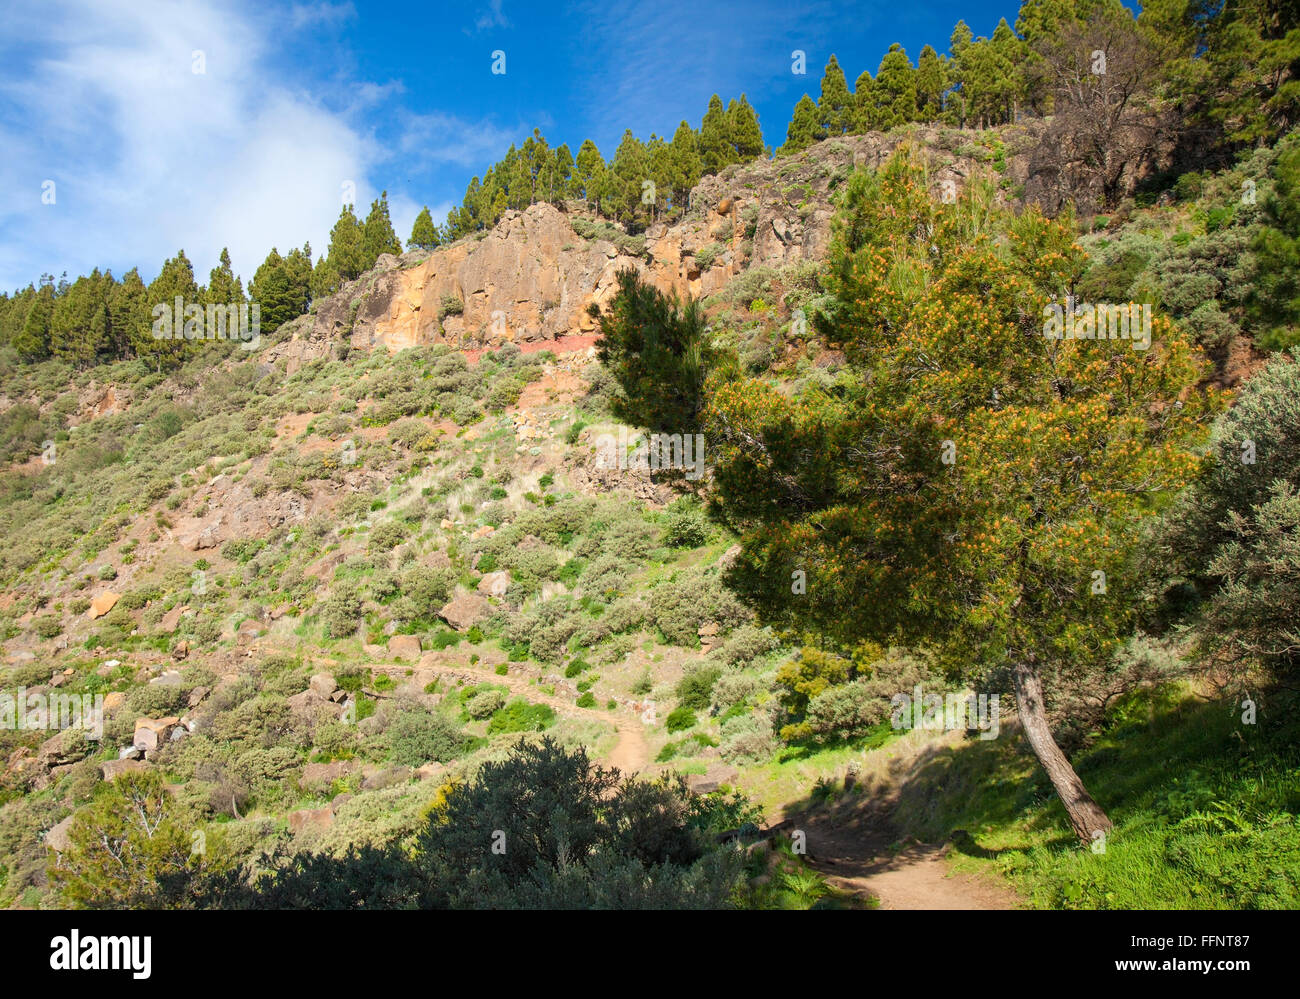 Gran Canaria, Caldera de Tejeda in February, hiking path along caldera wall, different colors visible in strata Stock Photo